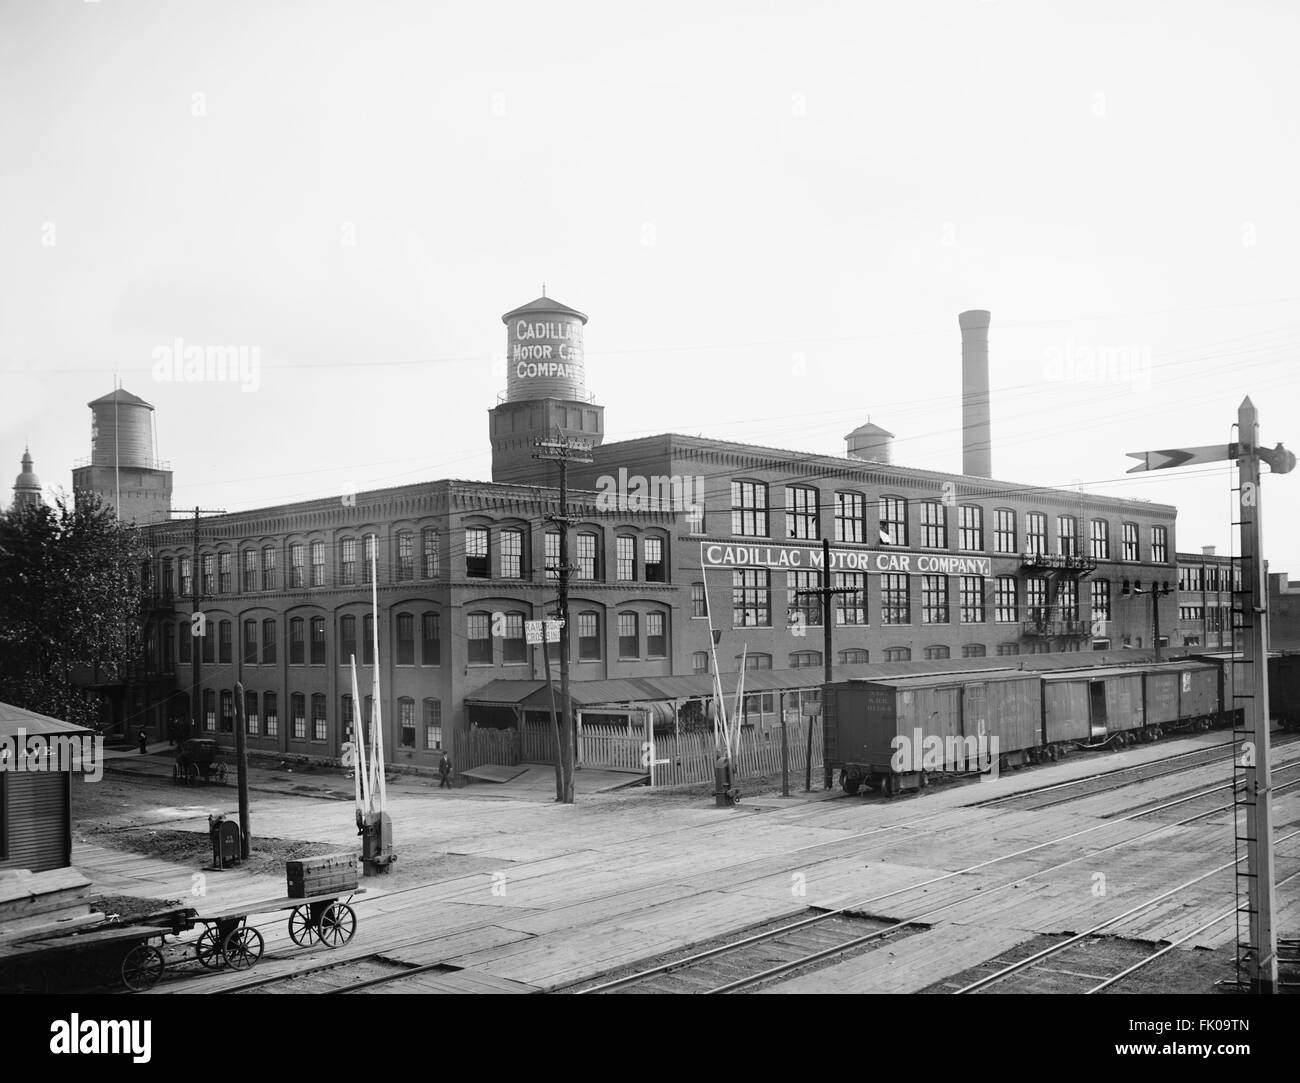 Cadillac Motor Car Company in Detroit, Michigan, USA, ca. 1910.jpg Stockfoto